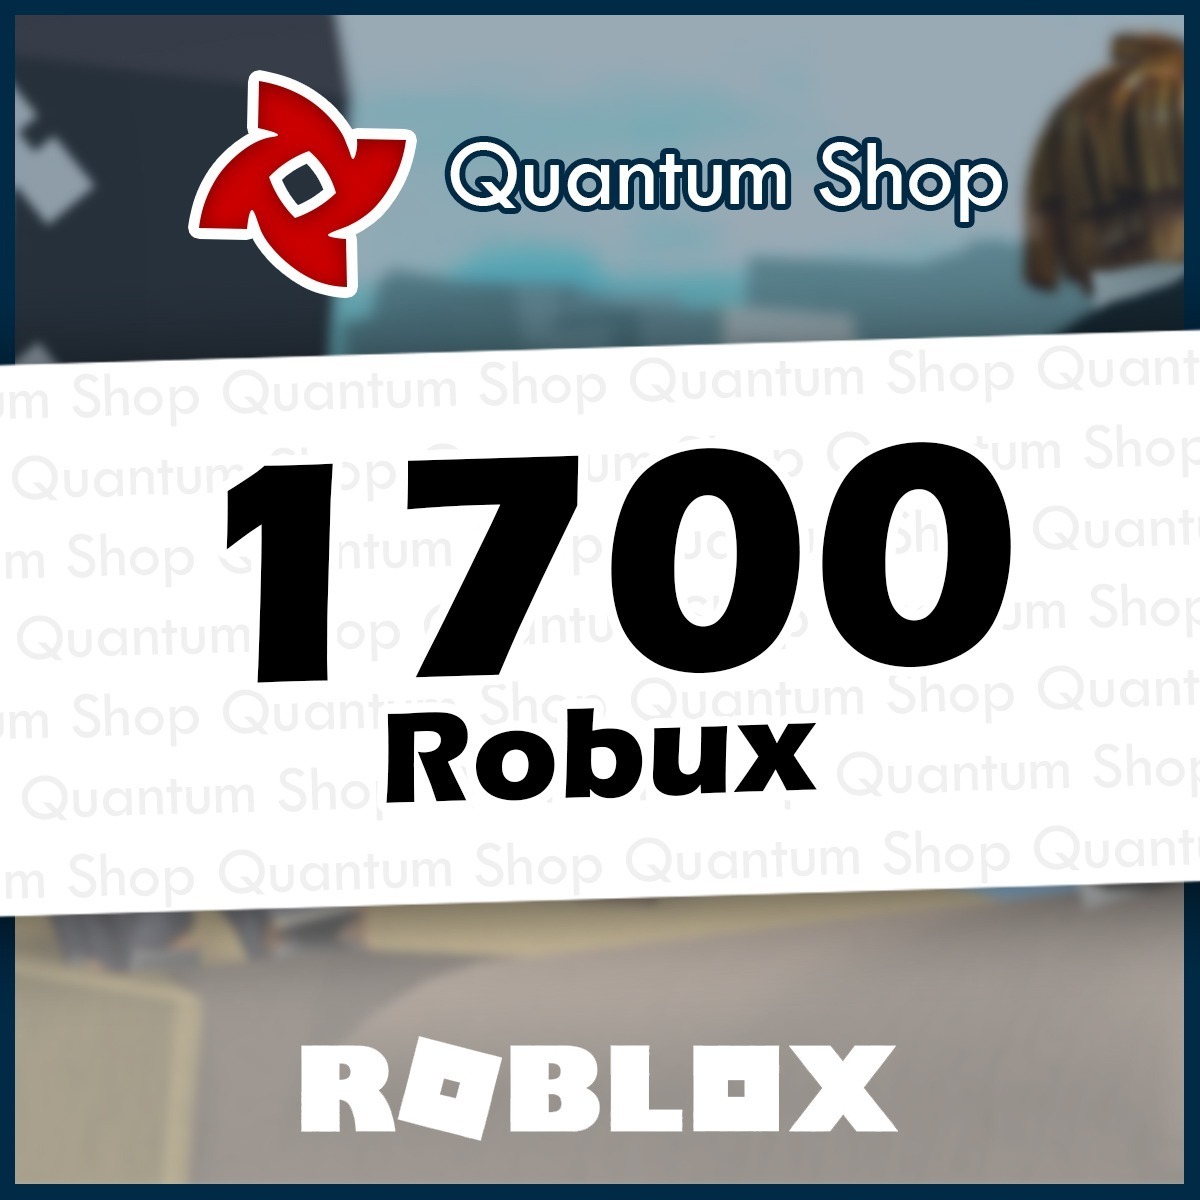 Robux Gratis Sin Verificar Free Robux Hacks No Human Verification 2019 - 4k robux cheap como tener robux gratis infinito